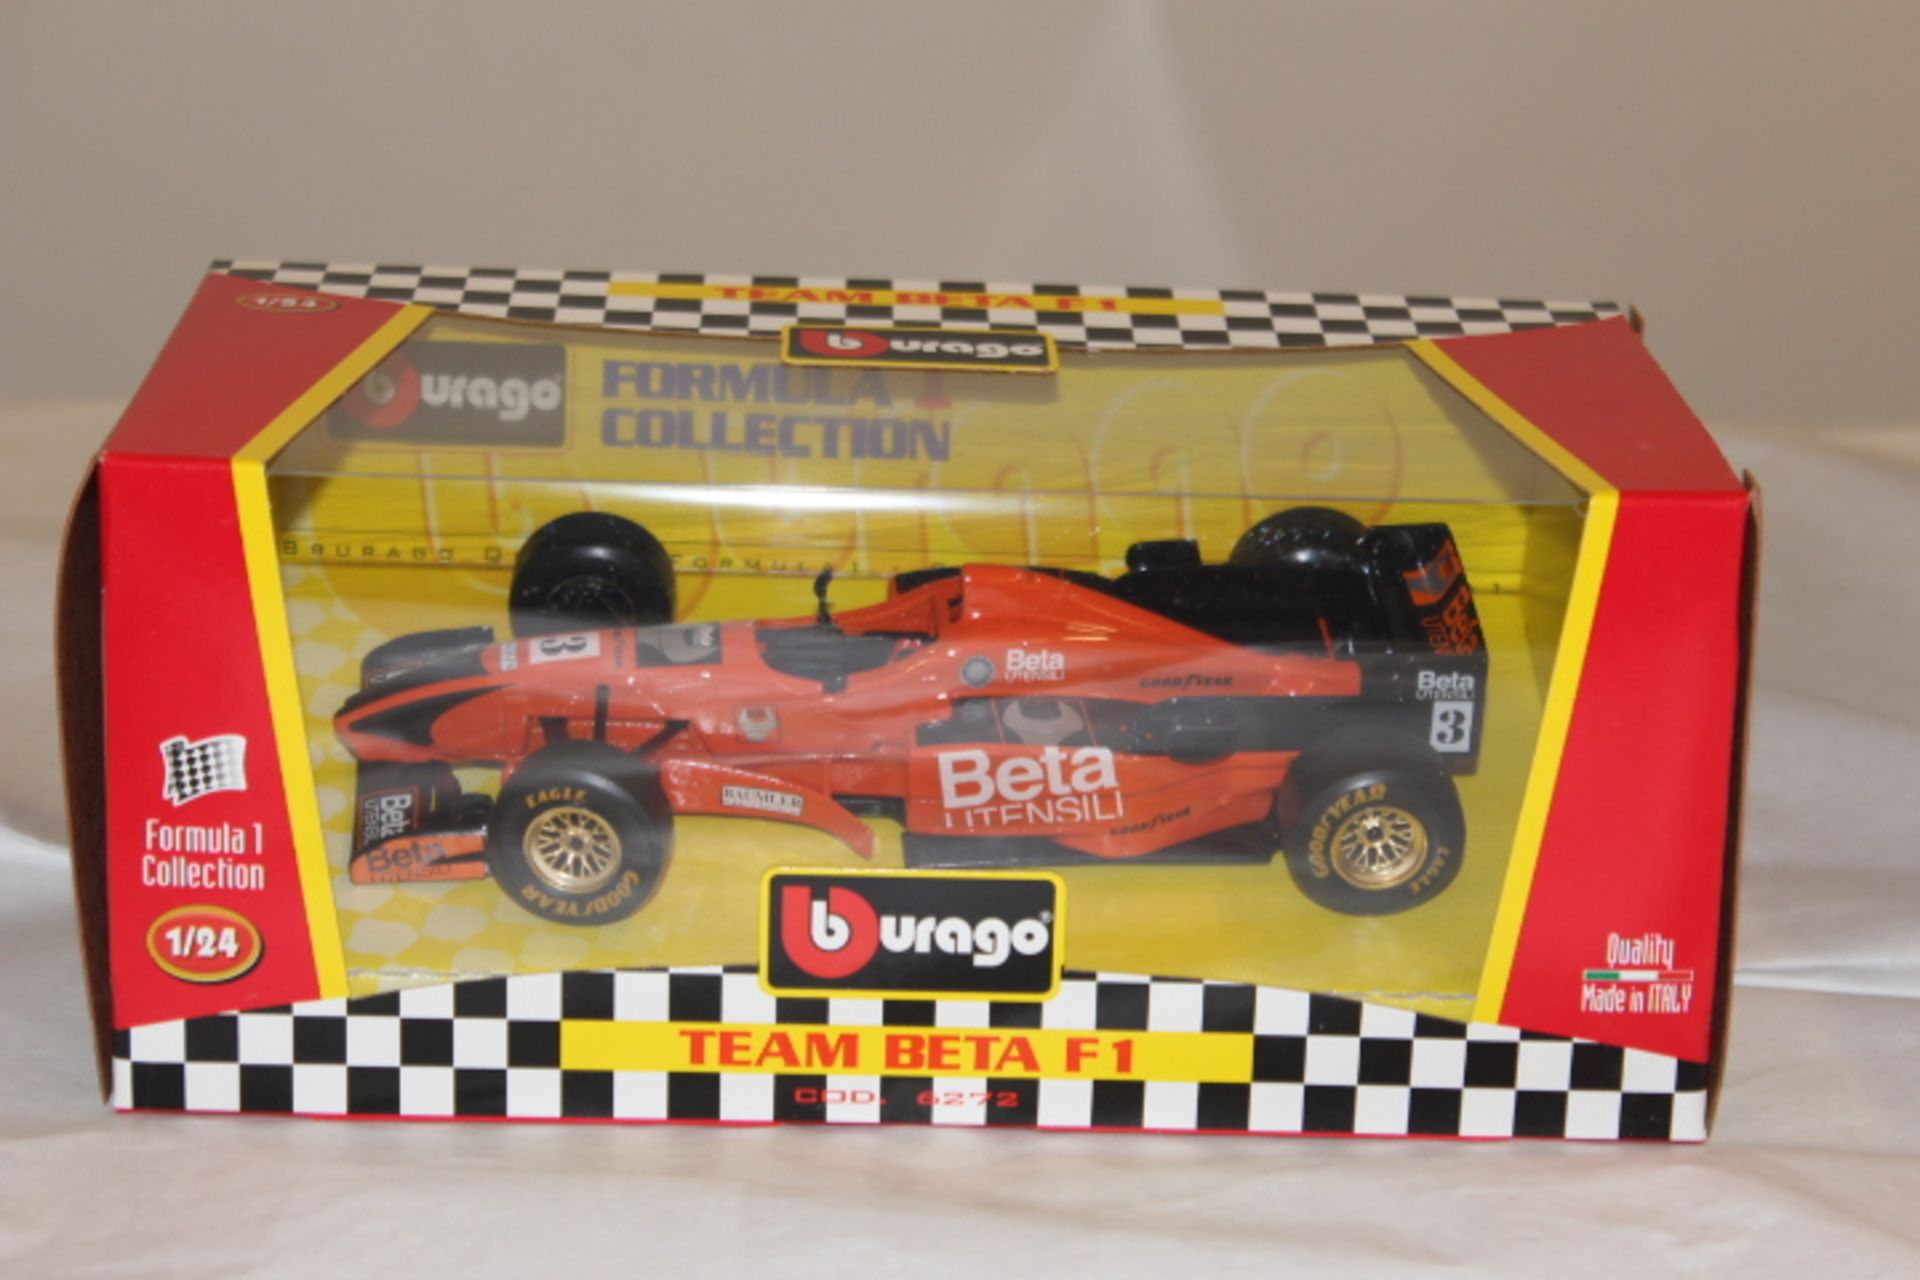 Burago Team Beta F1 collectable model car